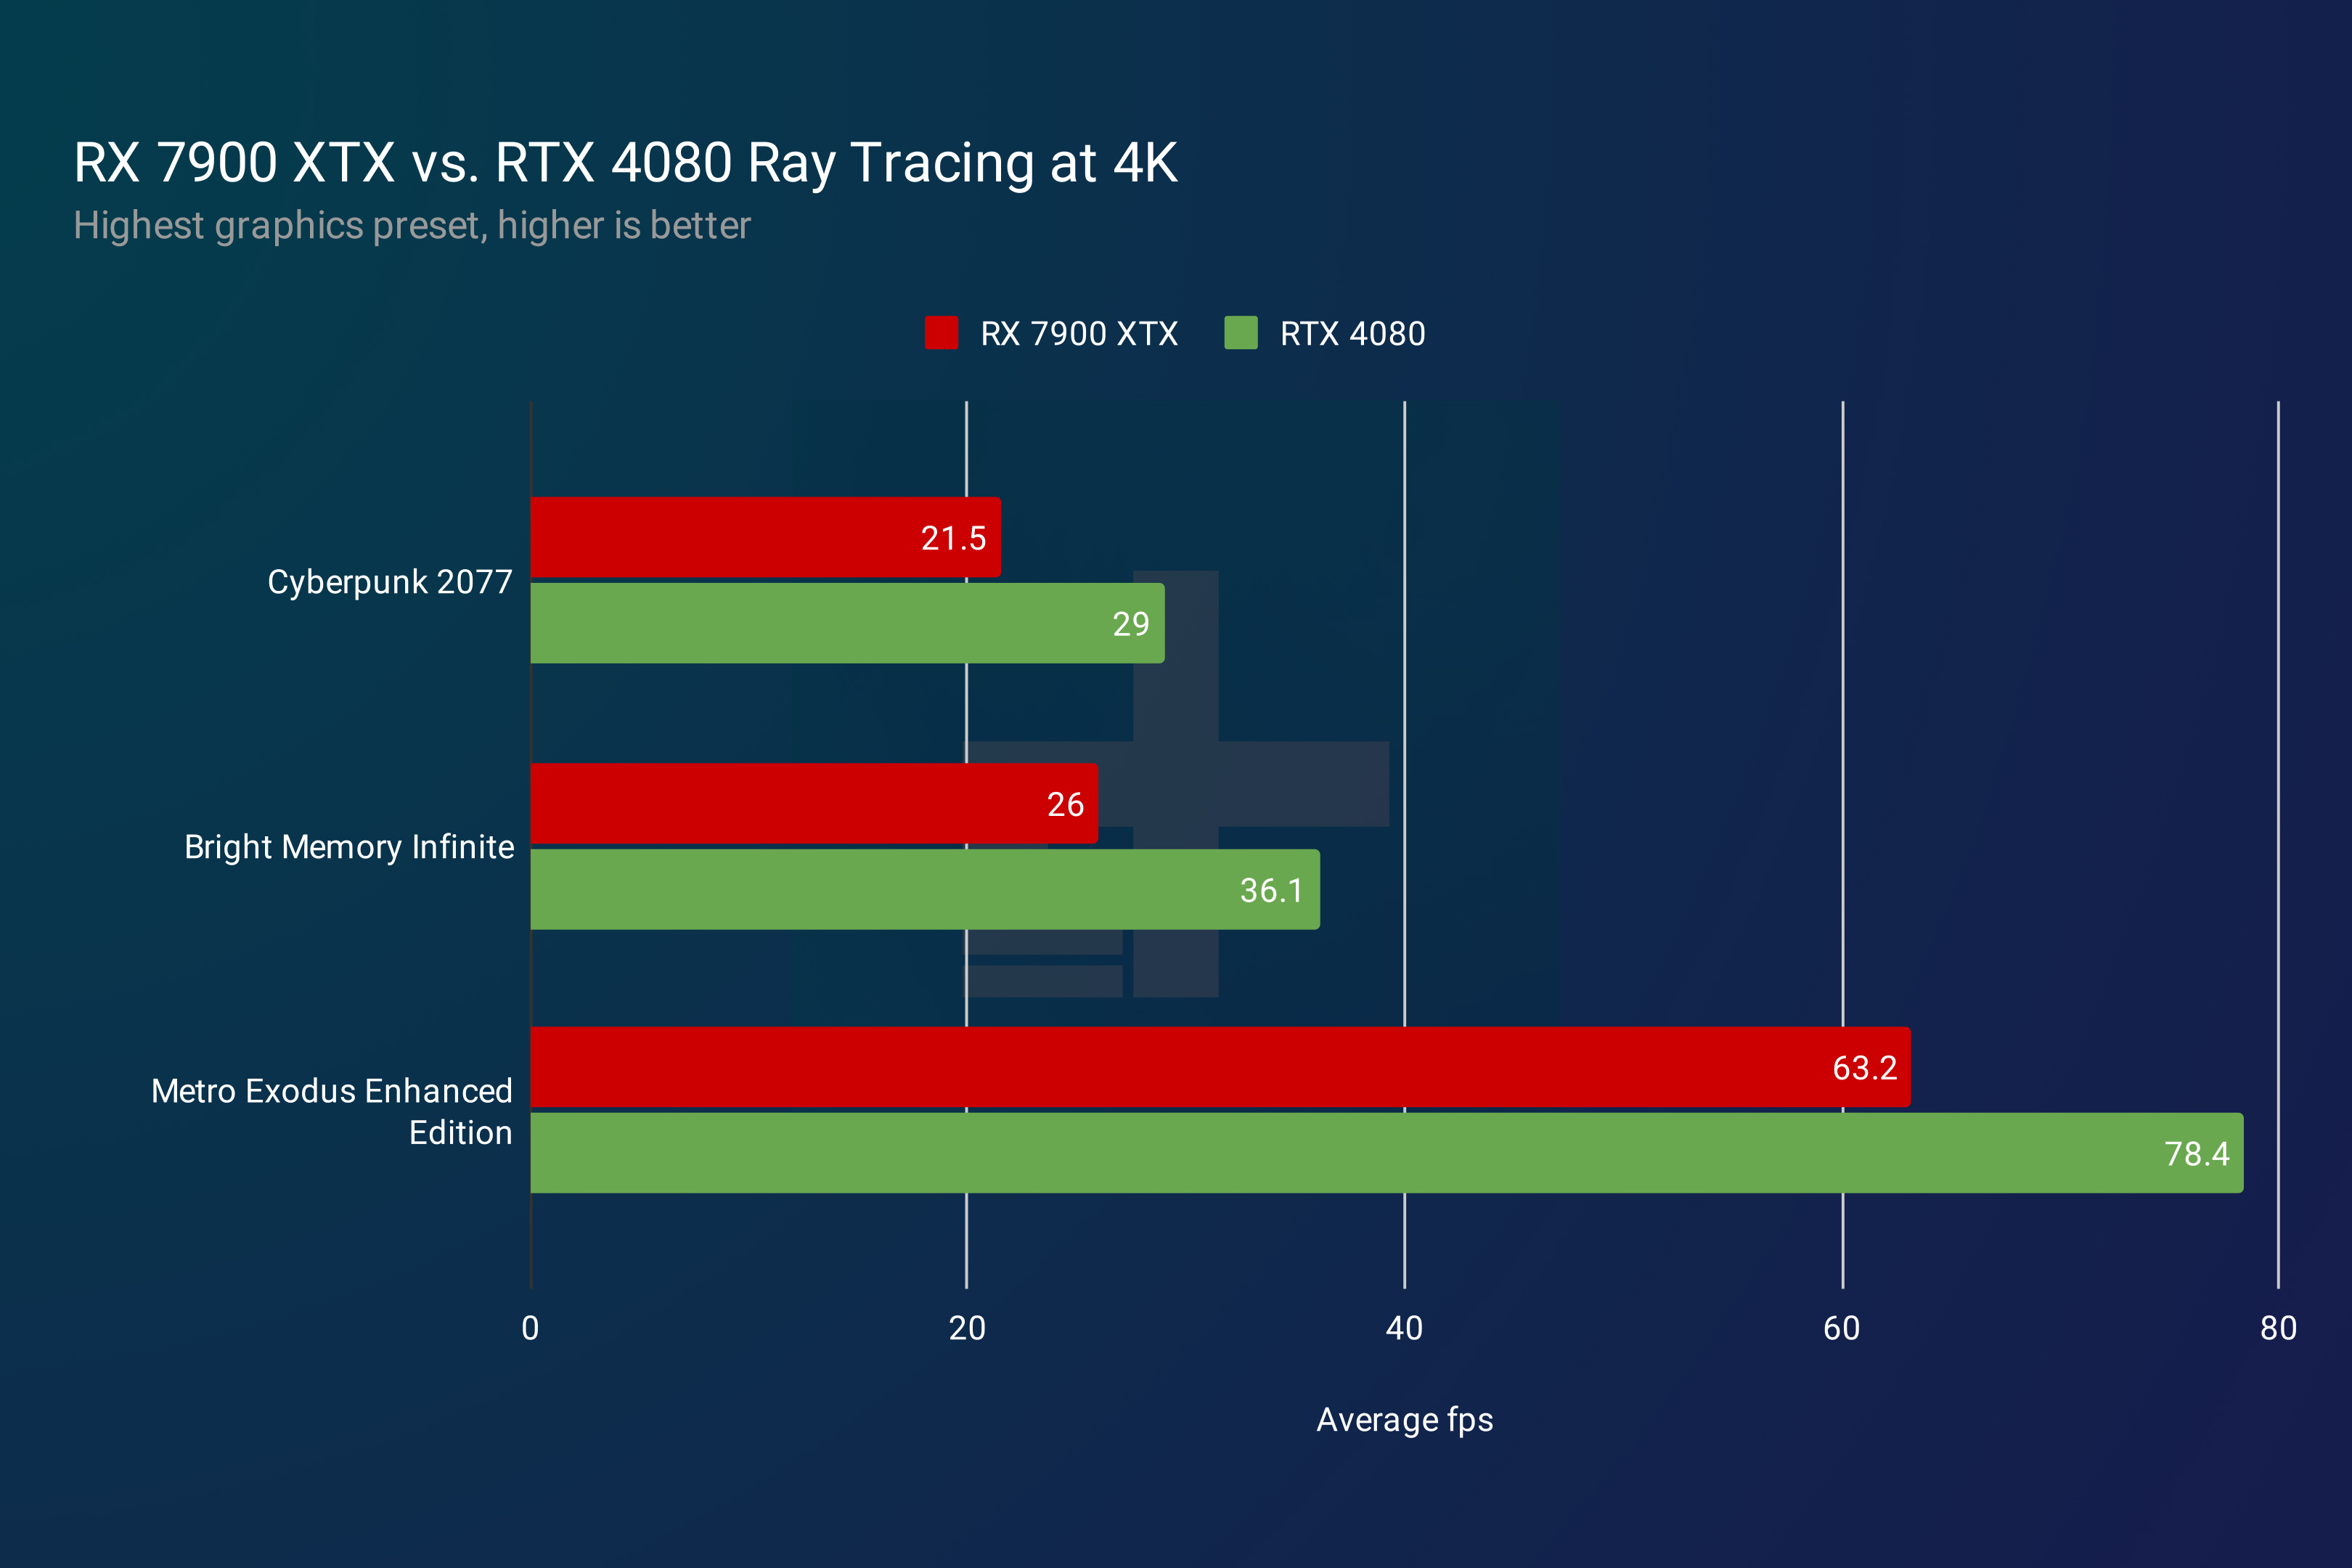 RTX 4060 vs RTX 4070 TI - Gaming 1080p 1440p (R7 7800X3D) 